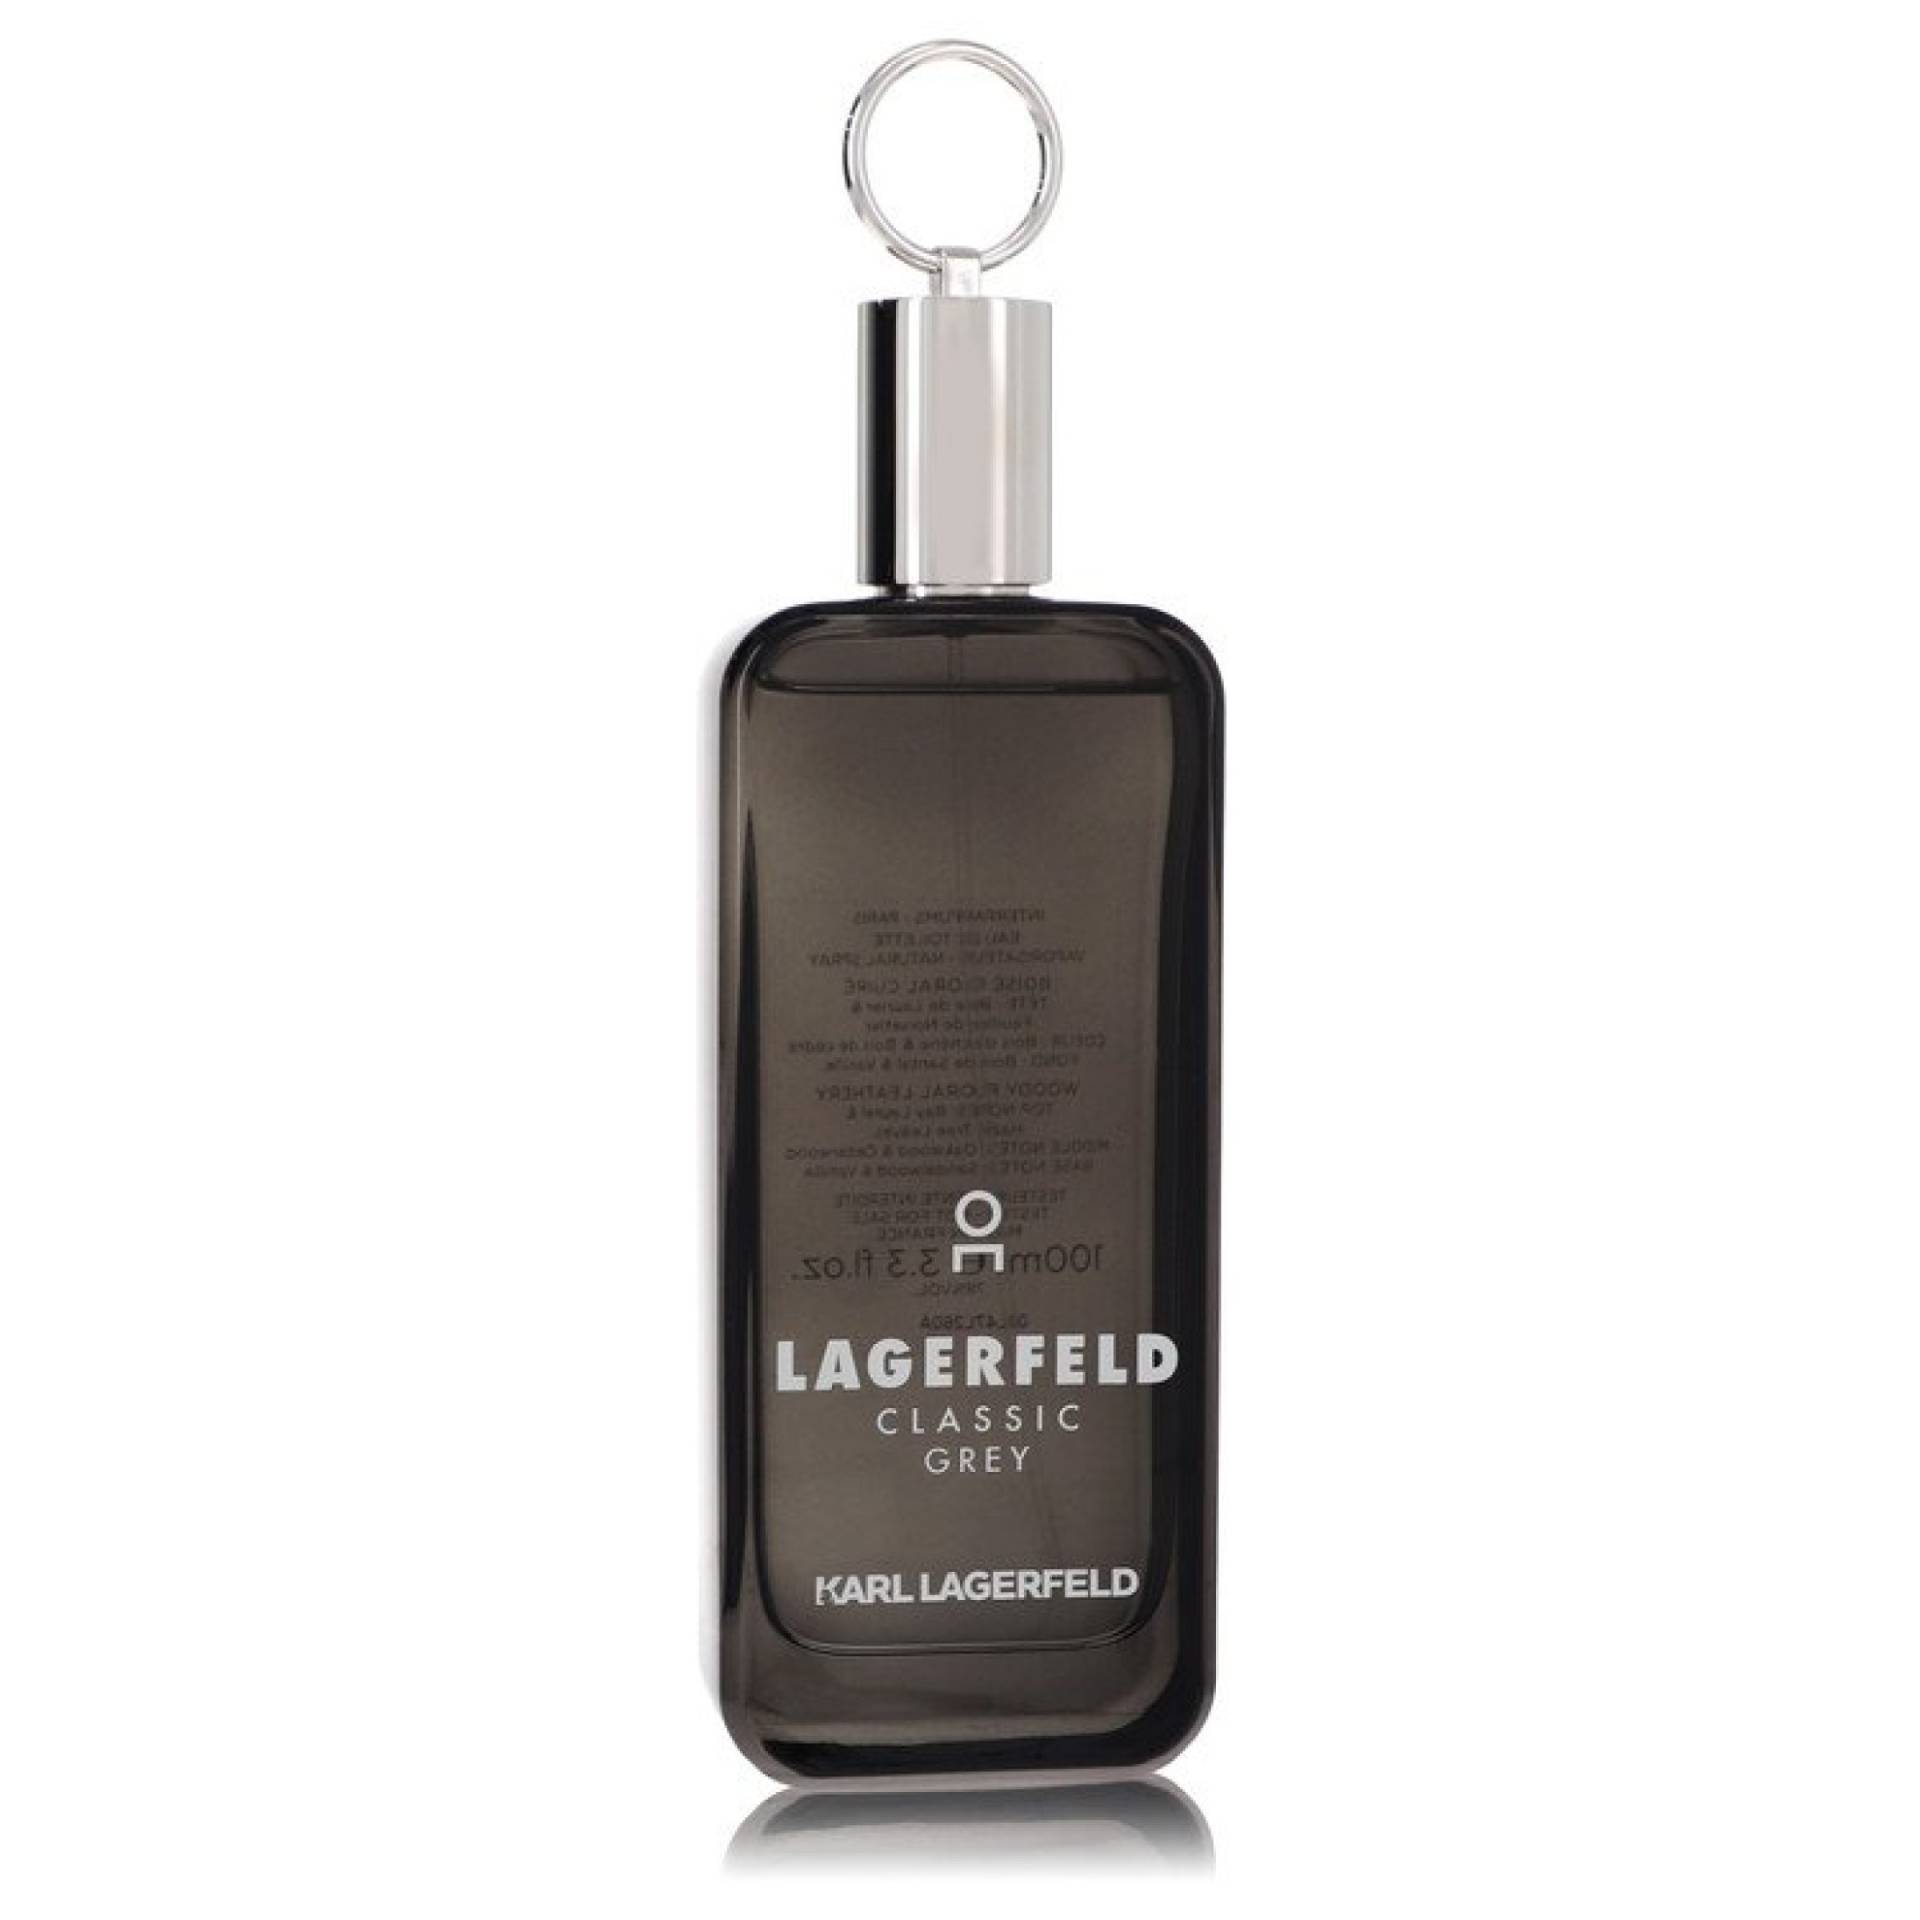 Karl Lagerfeld Lagerfeld Classic Grey Eau De Toilette Spray (Tester) 97 ml von Karl Lagerfeld